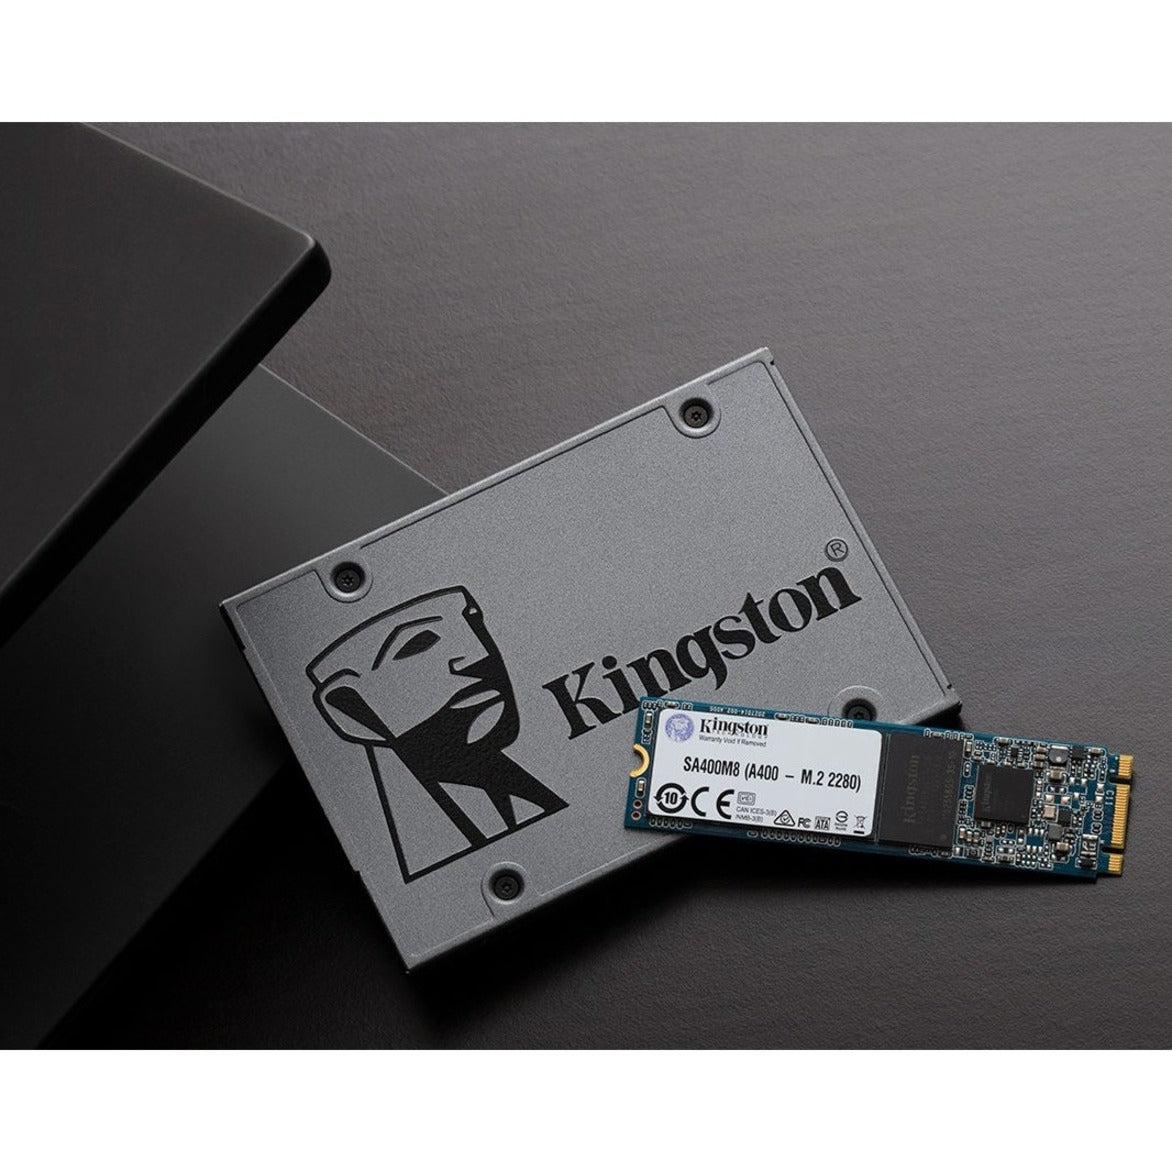 Kingston SA400M8/480G A400 SATA SSD, 480GB, 3 Year Warranty, M.2 2280